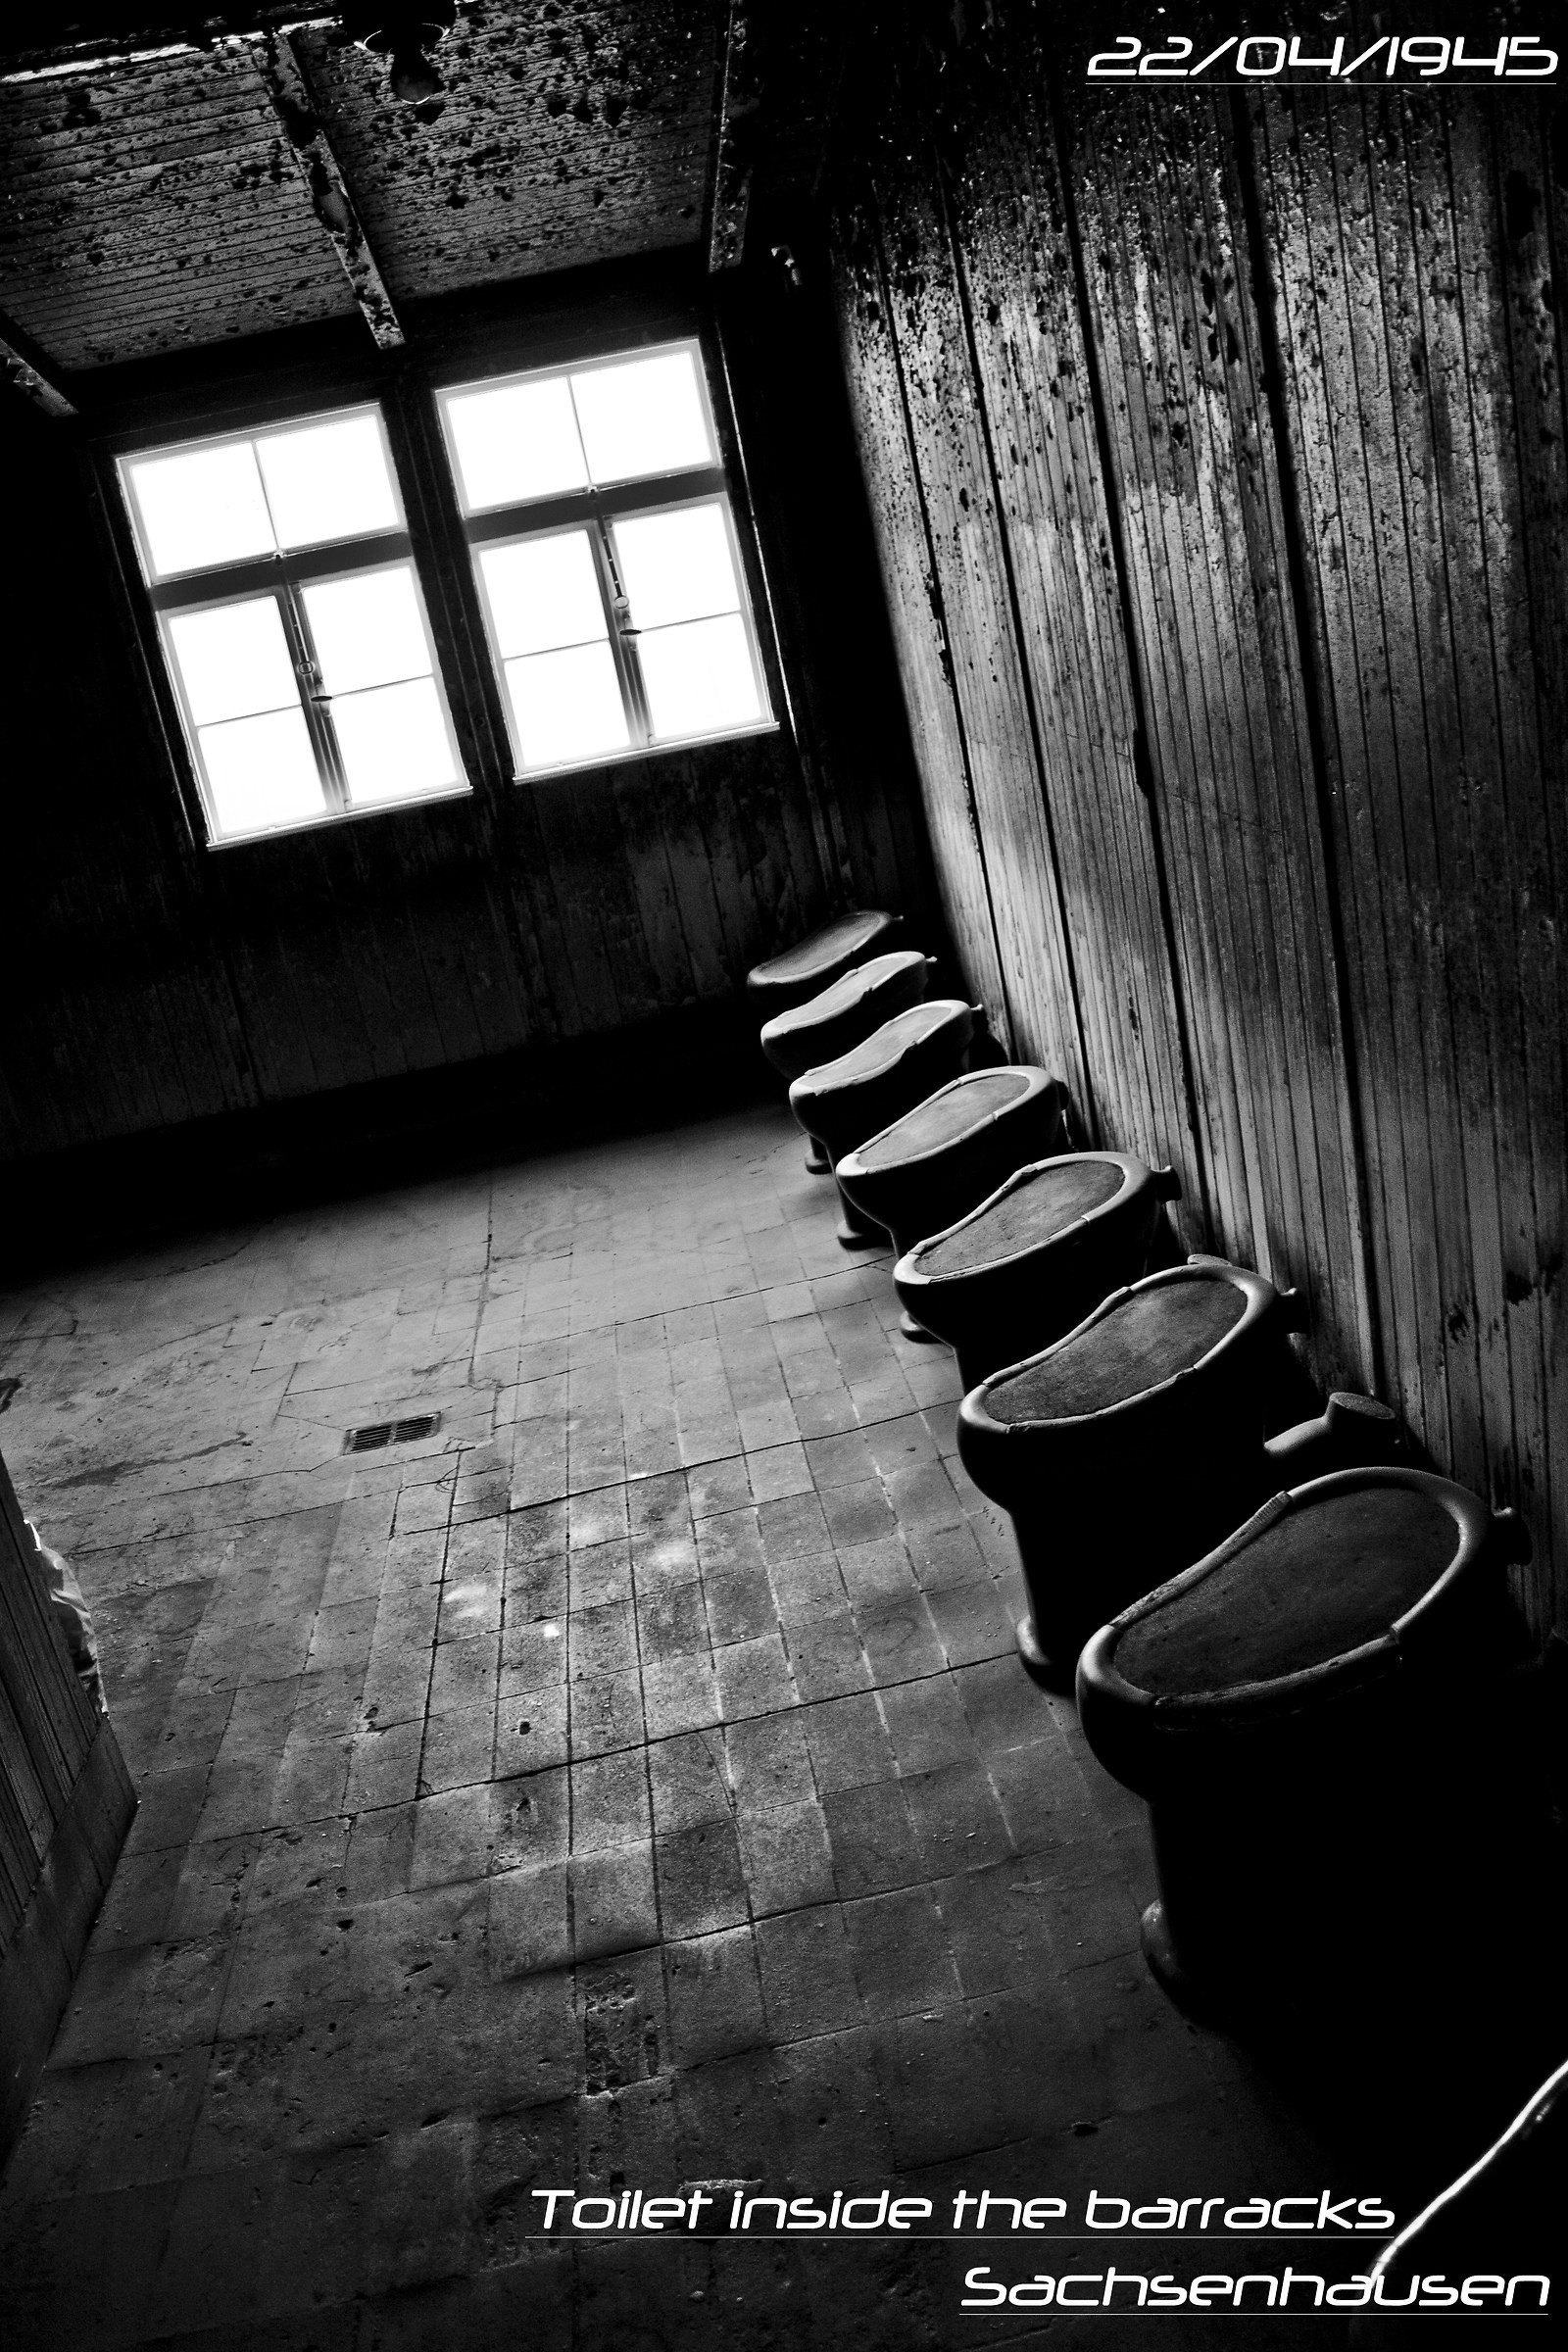 Toilet in the Barrack - Sachsenhausen...